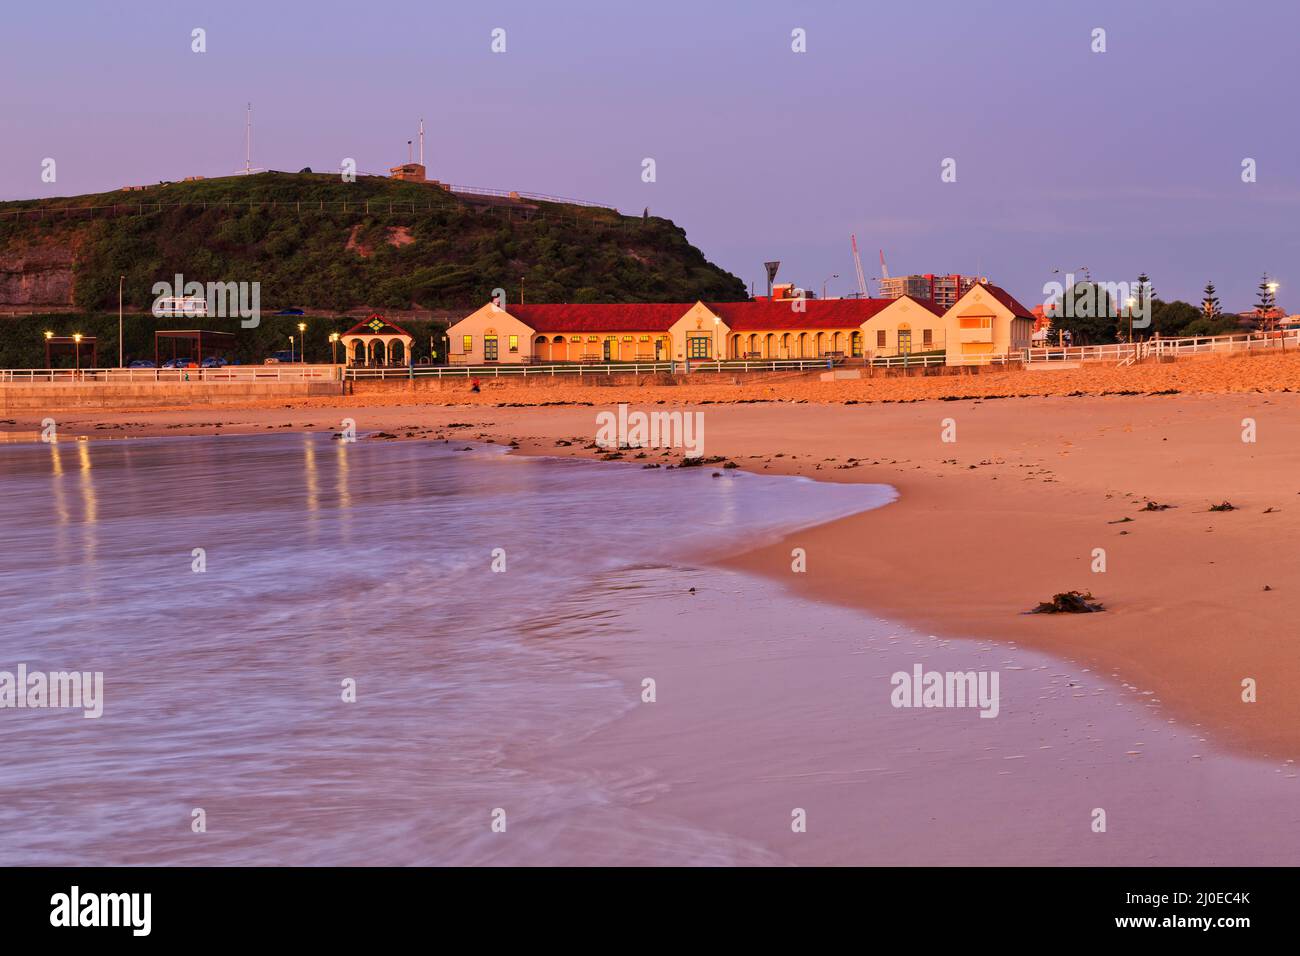 Public bath on NObbys beach in Newcastle city of Australia at sunrise - pacific coast. Stock Photo